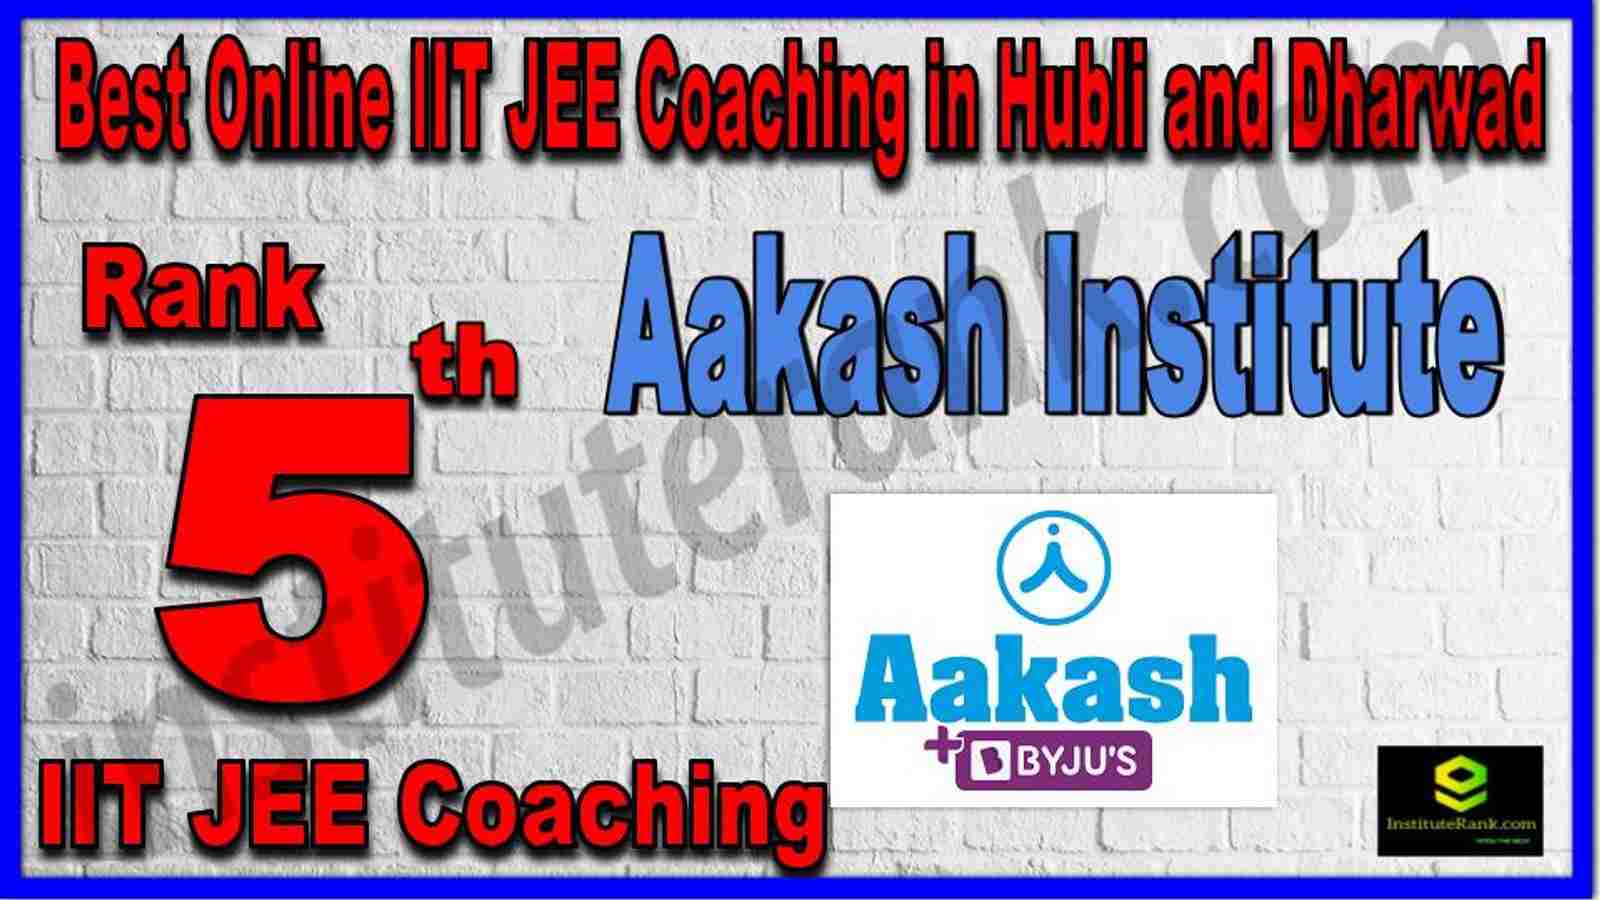 Rank 5th Best Online IIT JEE Coaching in Hubli and Dharwad